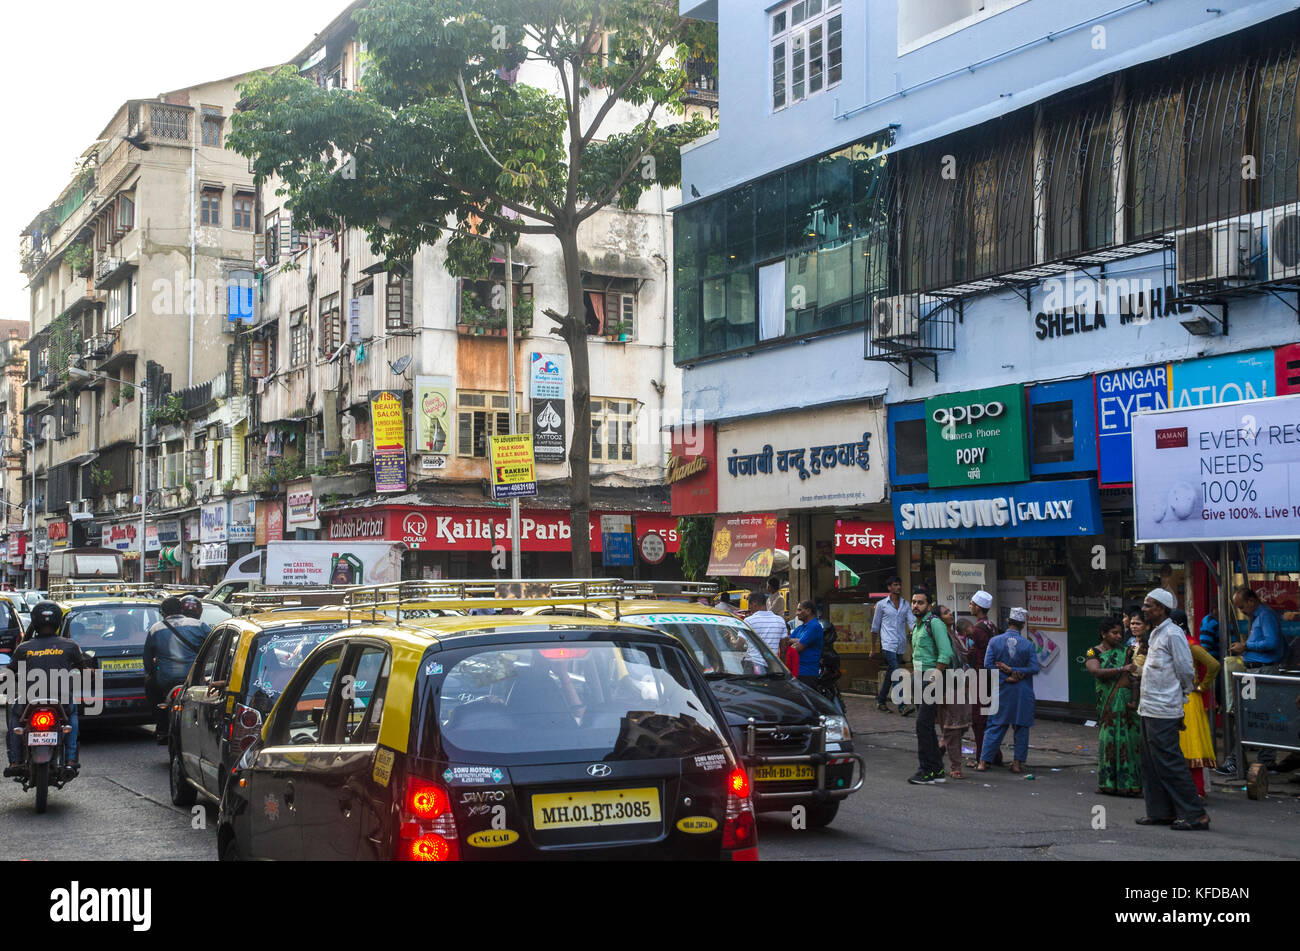 Busy street scene in Mumbai, India Stock Photo